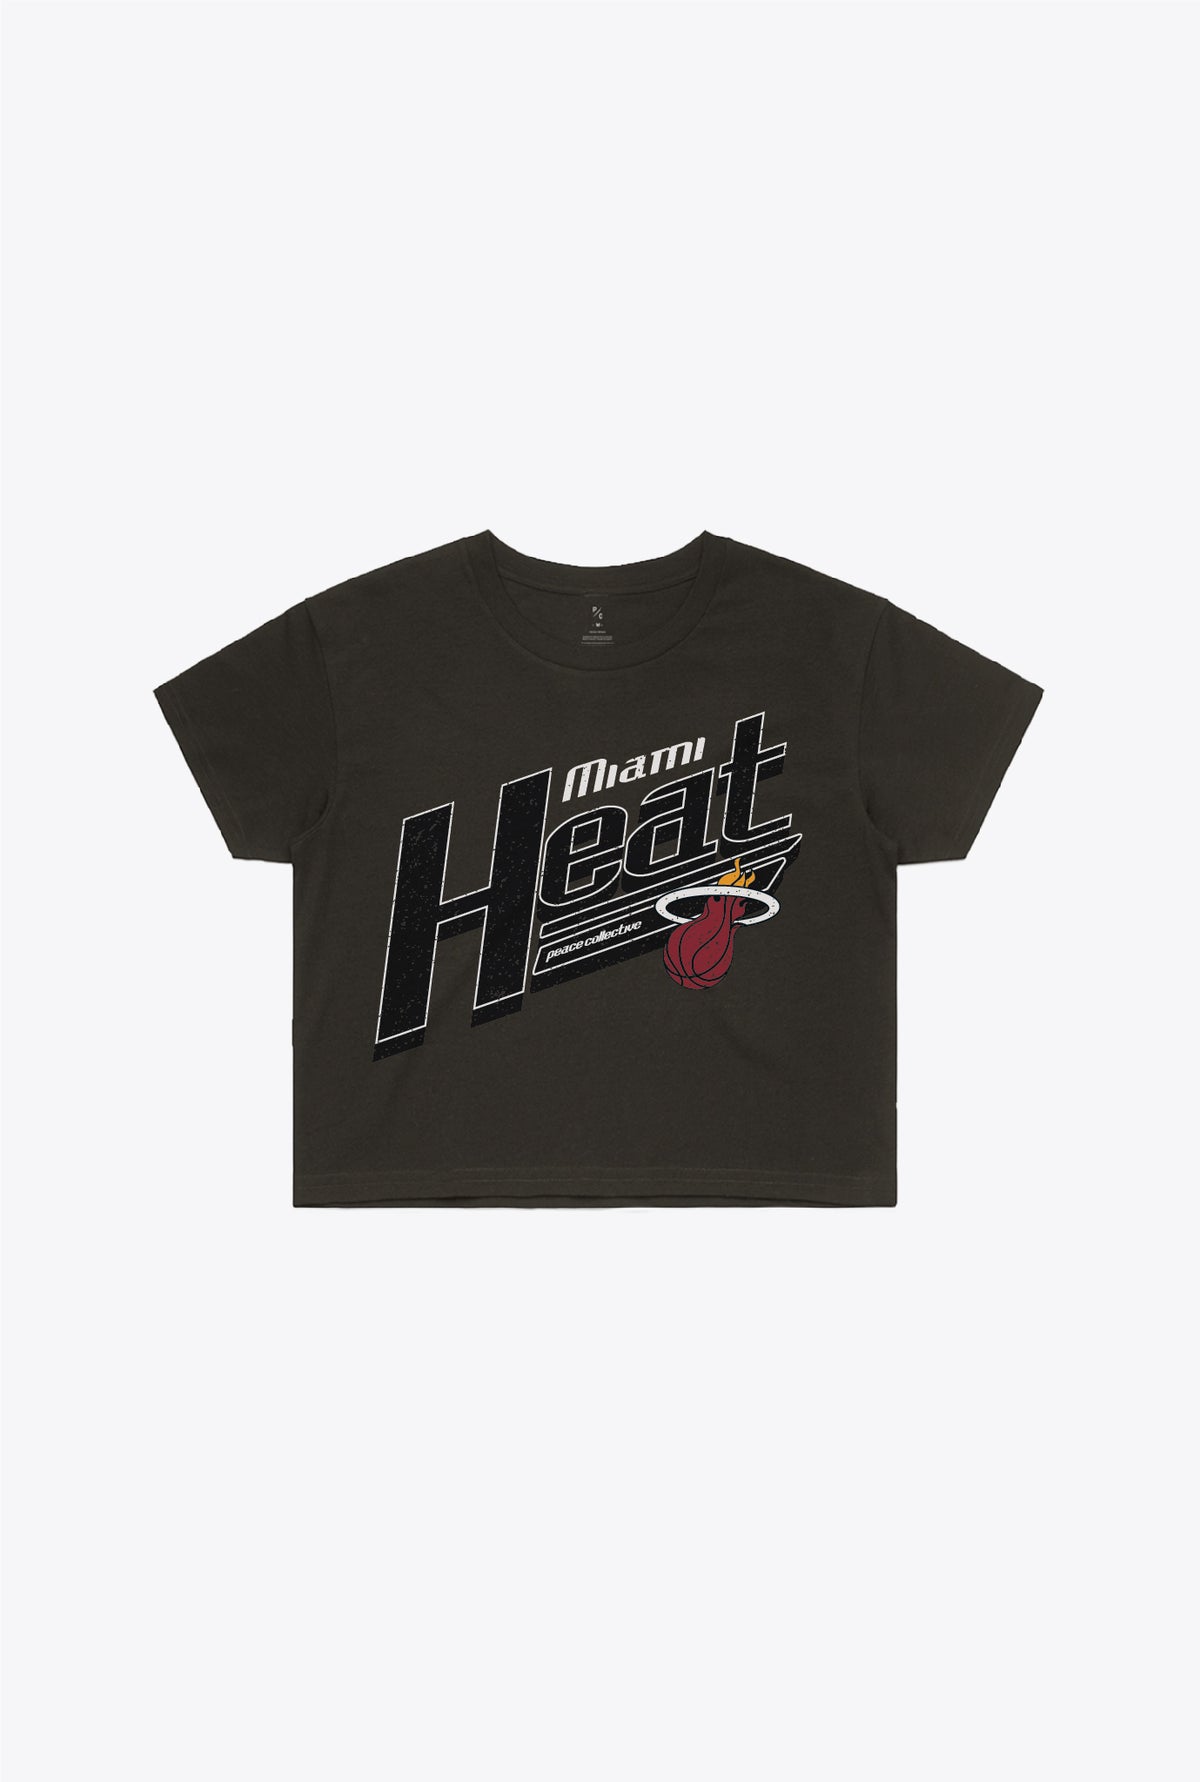 Miami Heat Garment Dyed Cropped T-Shirt - Black